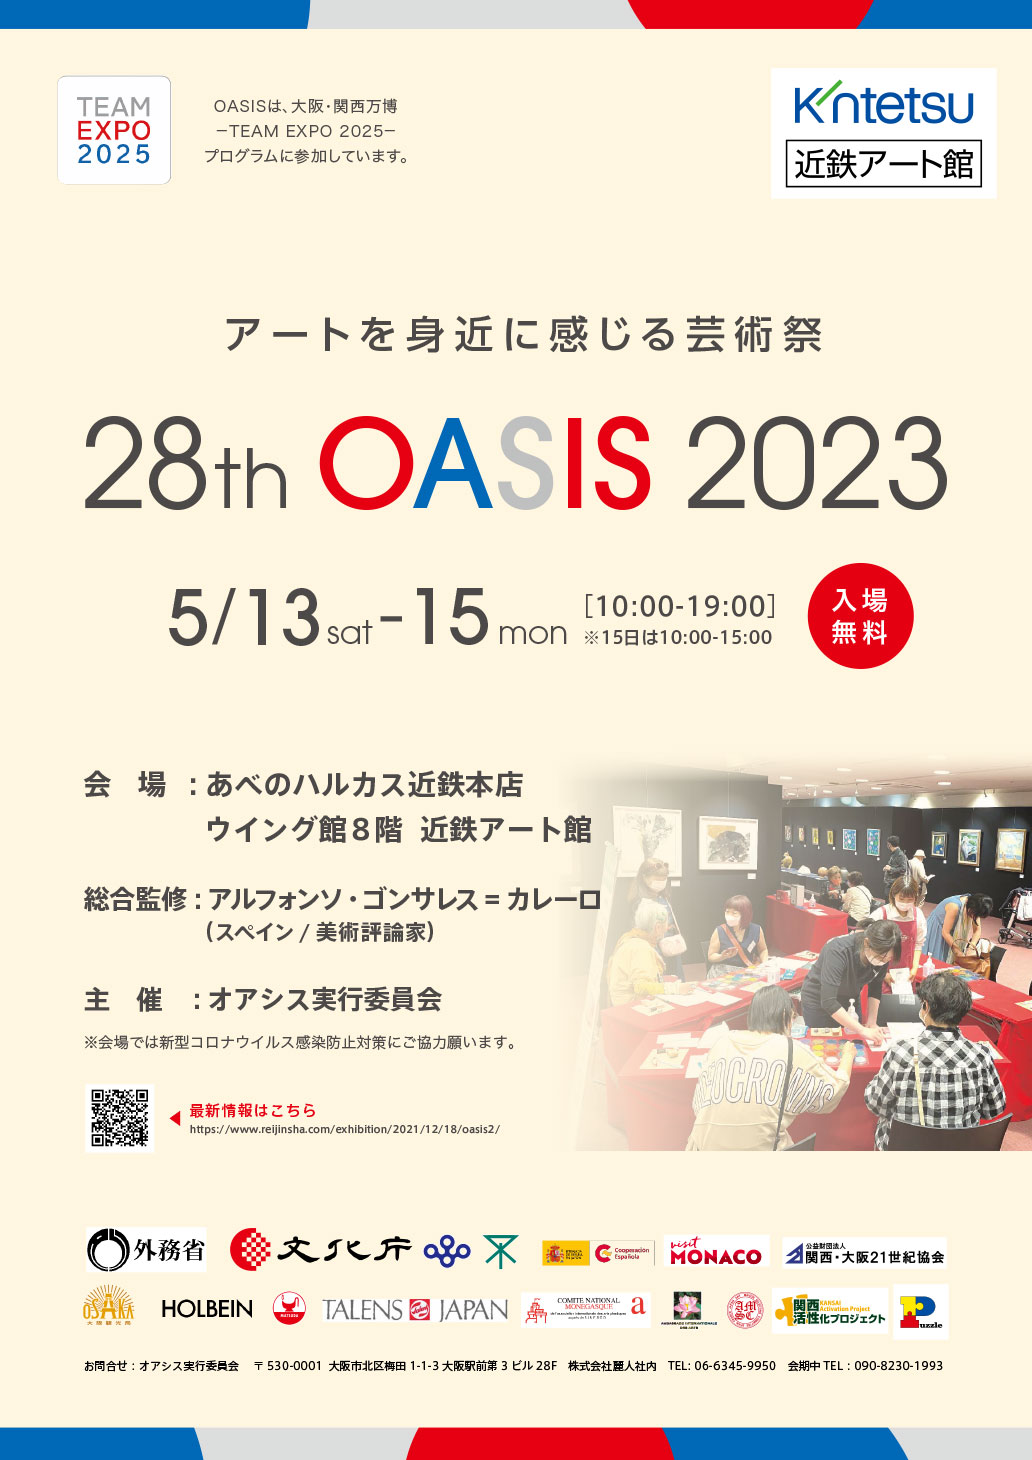 TEAM EXPO 2025」参加プログラム第28回 オアシス 2023 - 百兵衛ONLINE